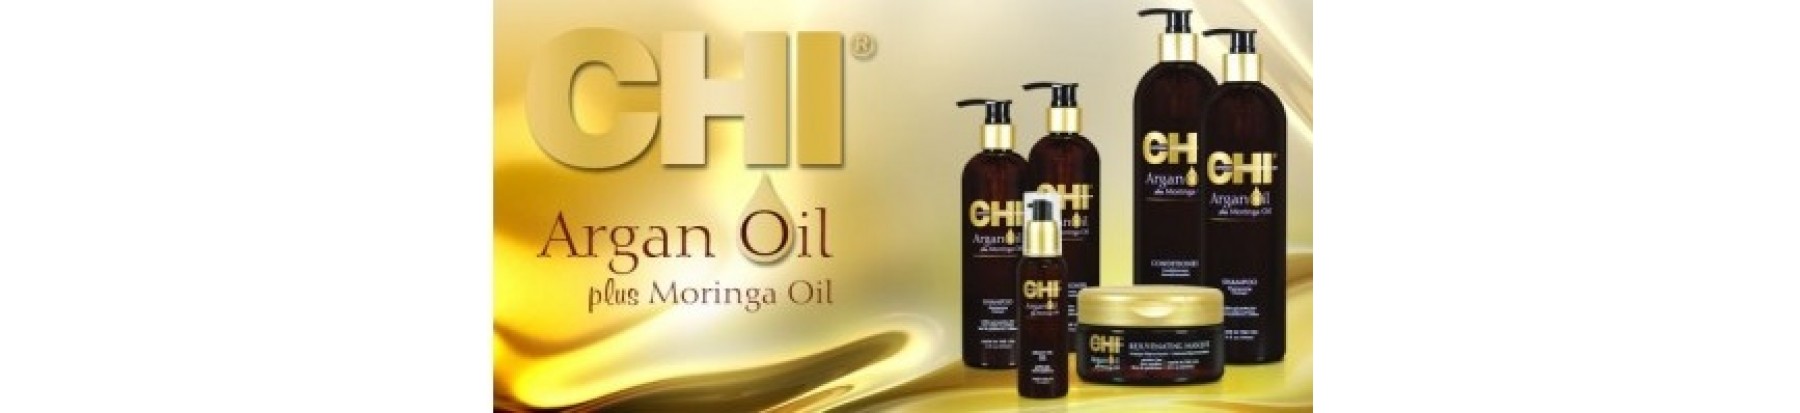 CHI Argan Oil - Средства на основе масла Арганы и дерева Моринга 